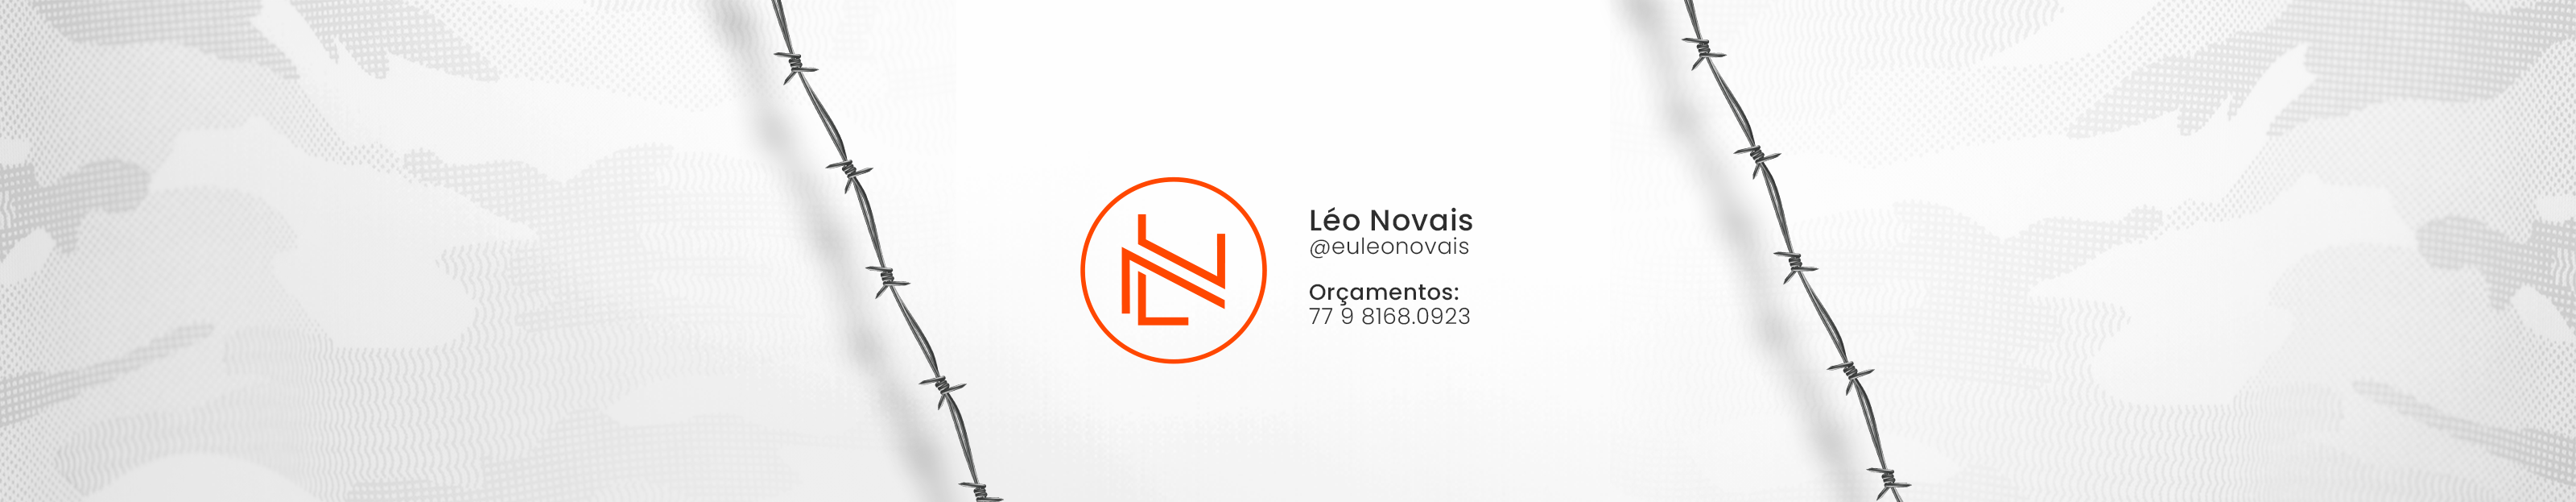 Banner de perfil de Leo Novais ✪